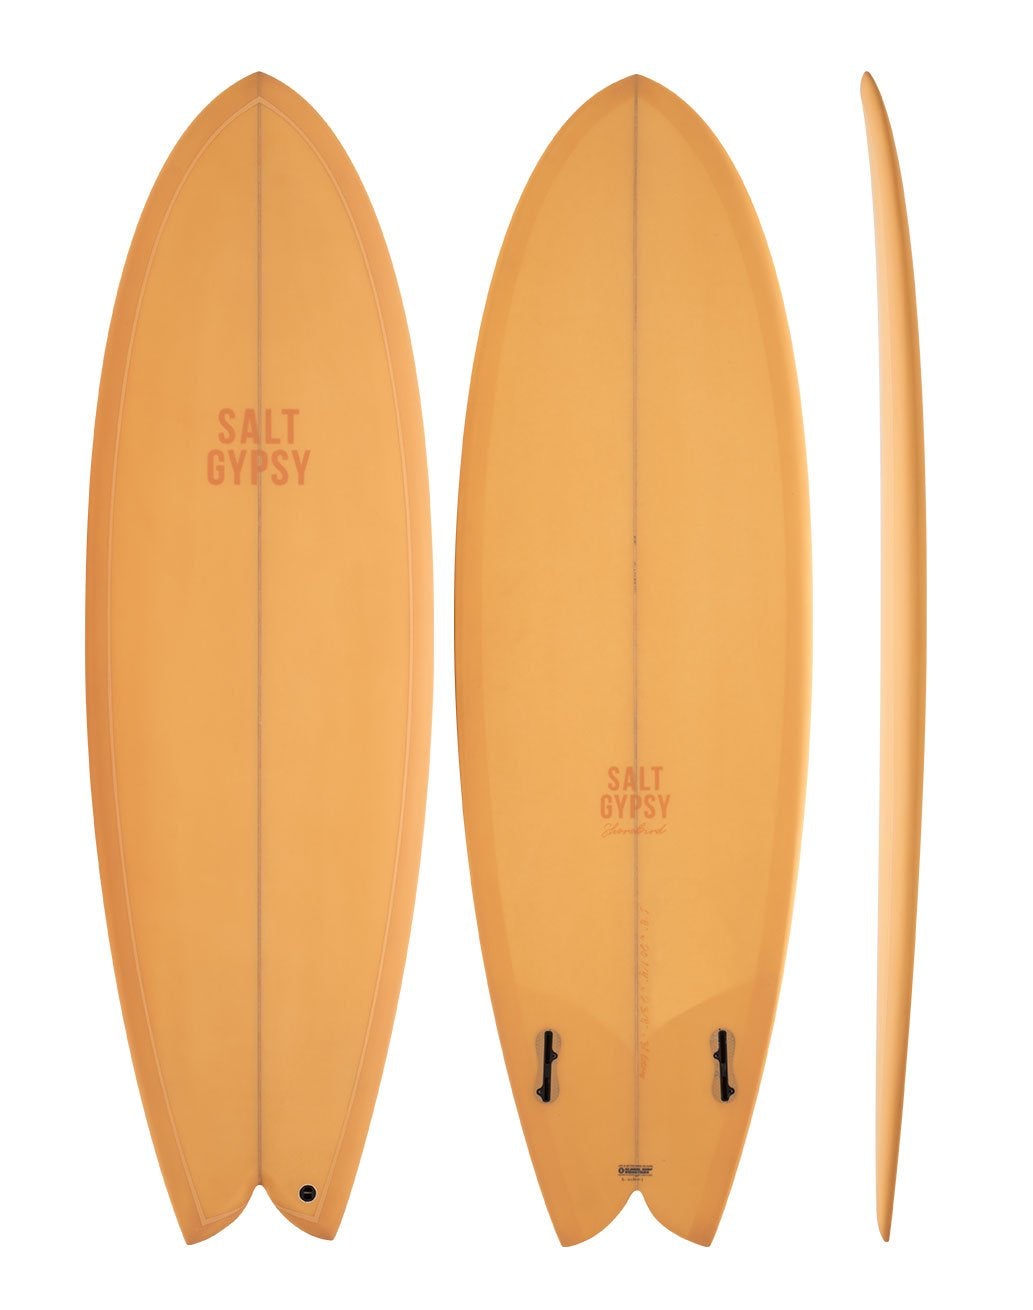 SALT GYPSY SHOREBIRD 5'8" SURFBOARD